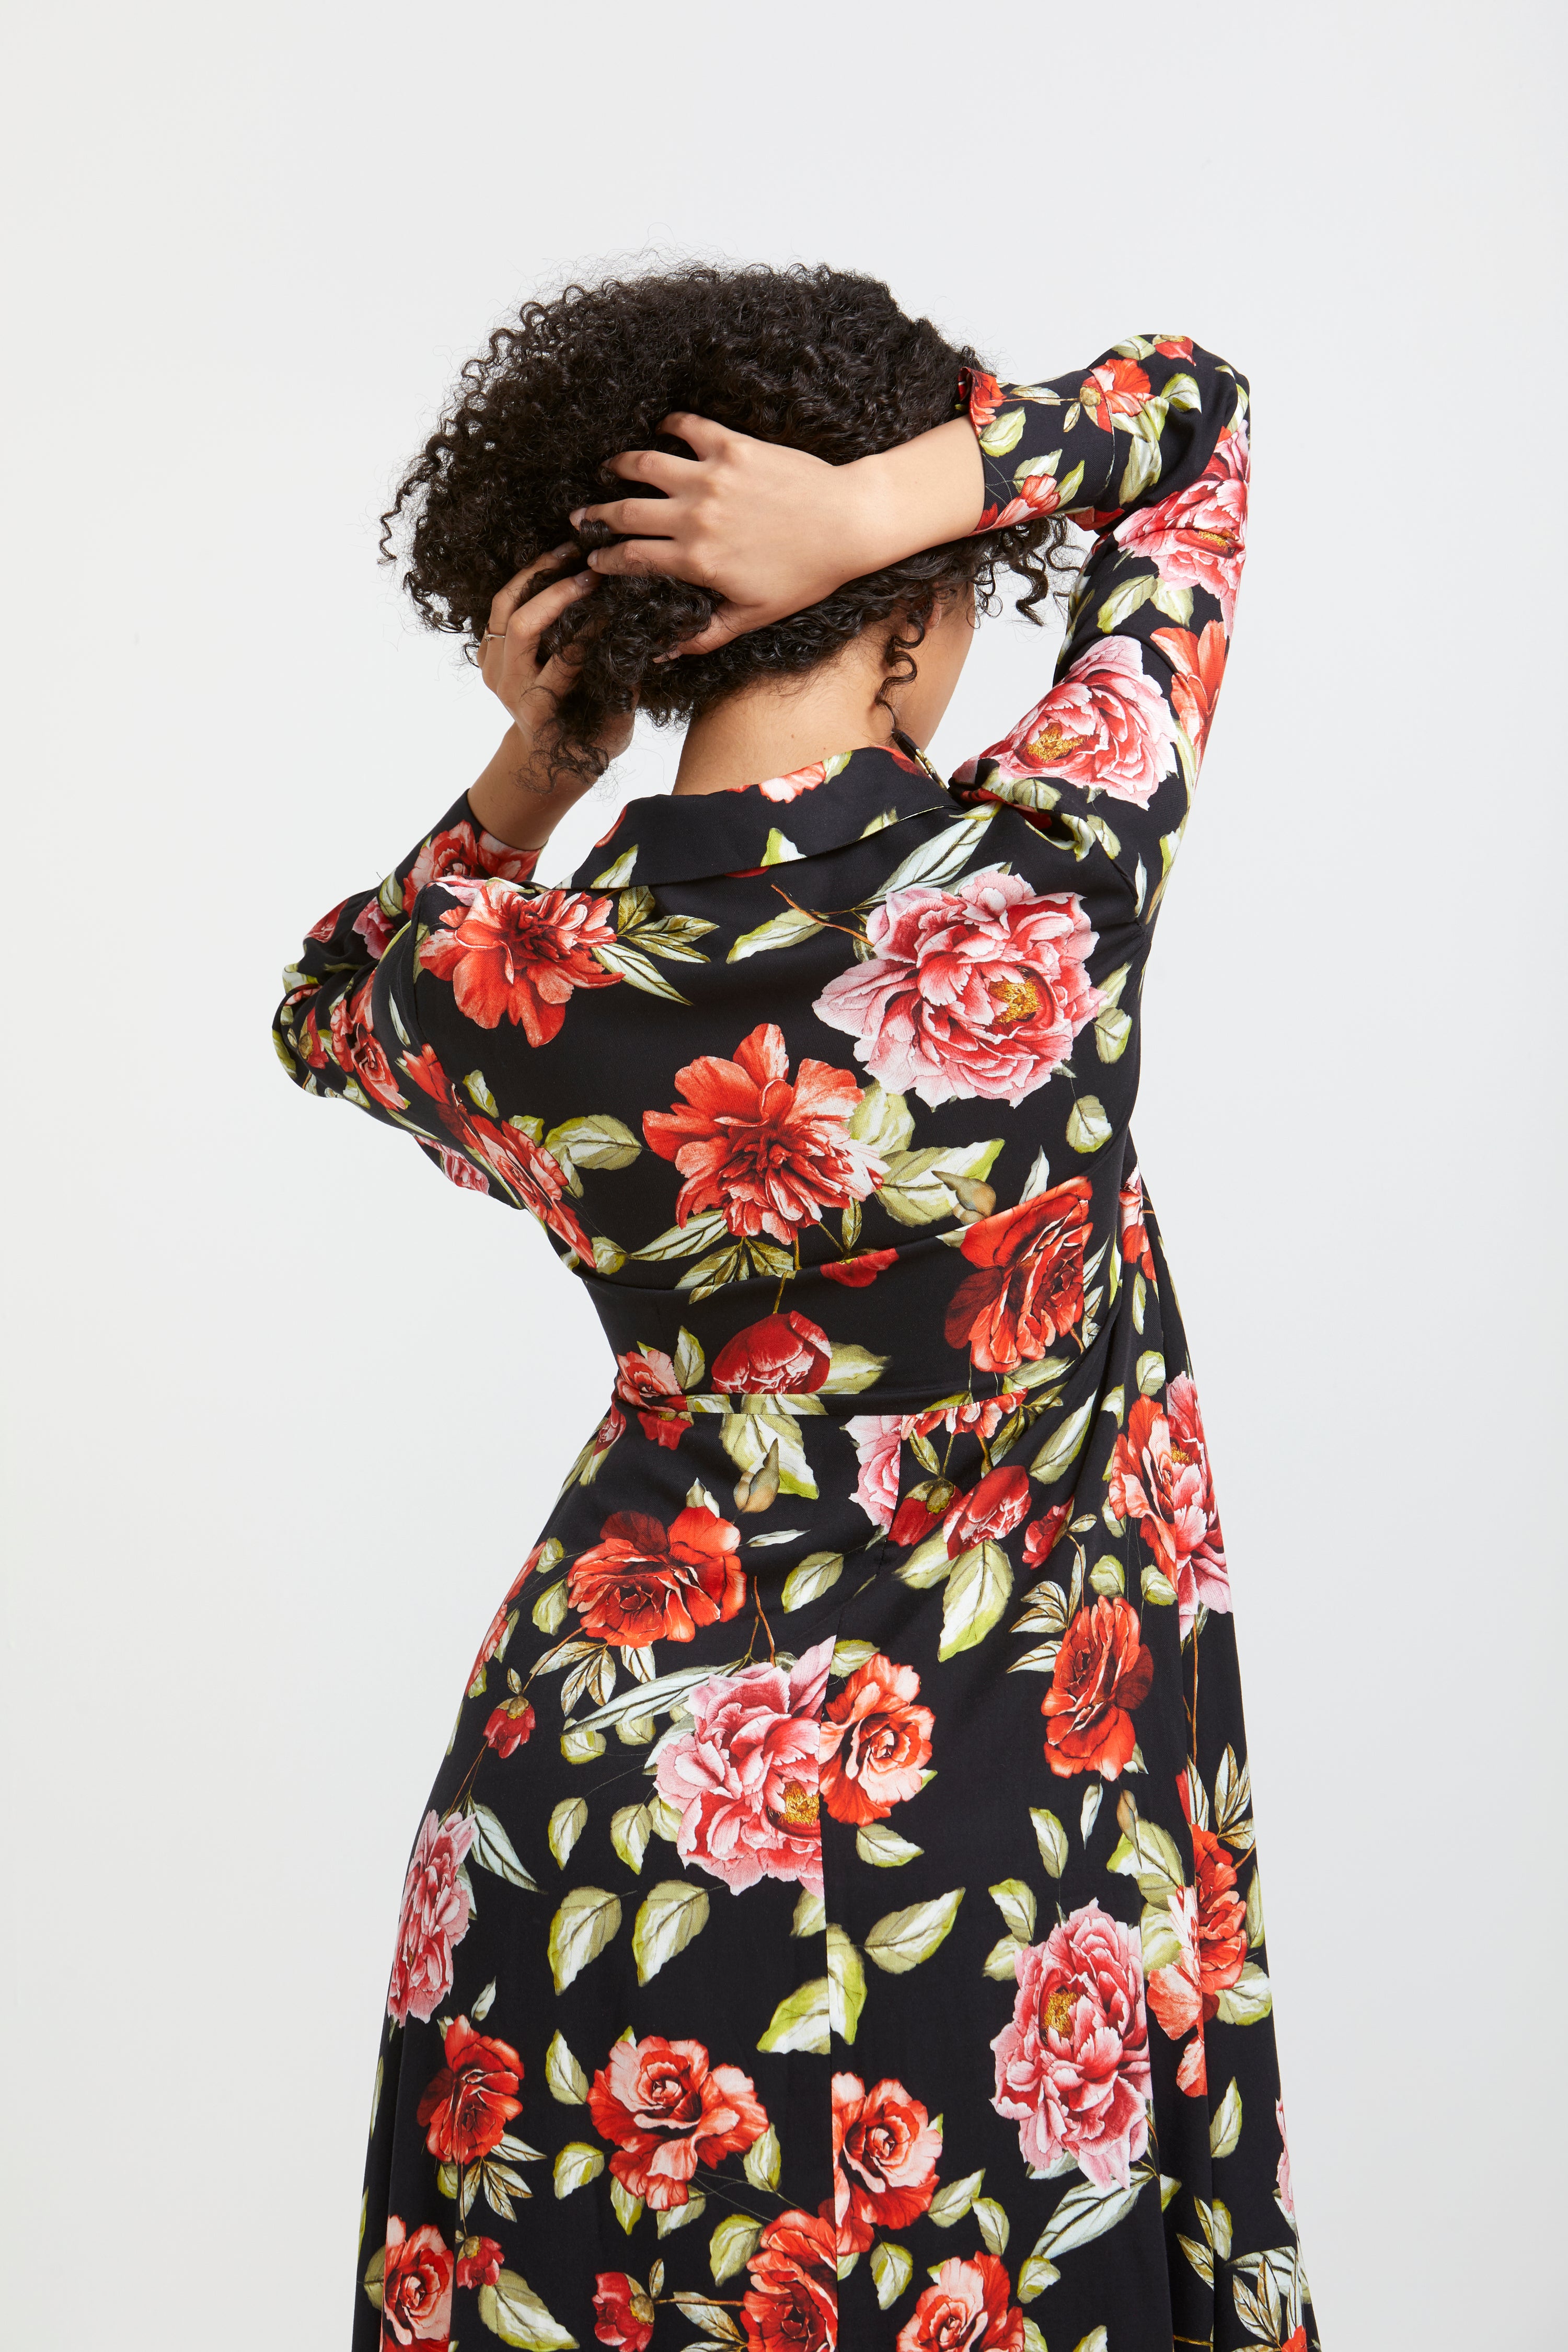 AnnaCristy Milano Natalia Black Floral Wrap Dress Back Closeup- Made in Italy